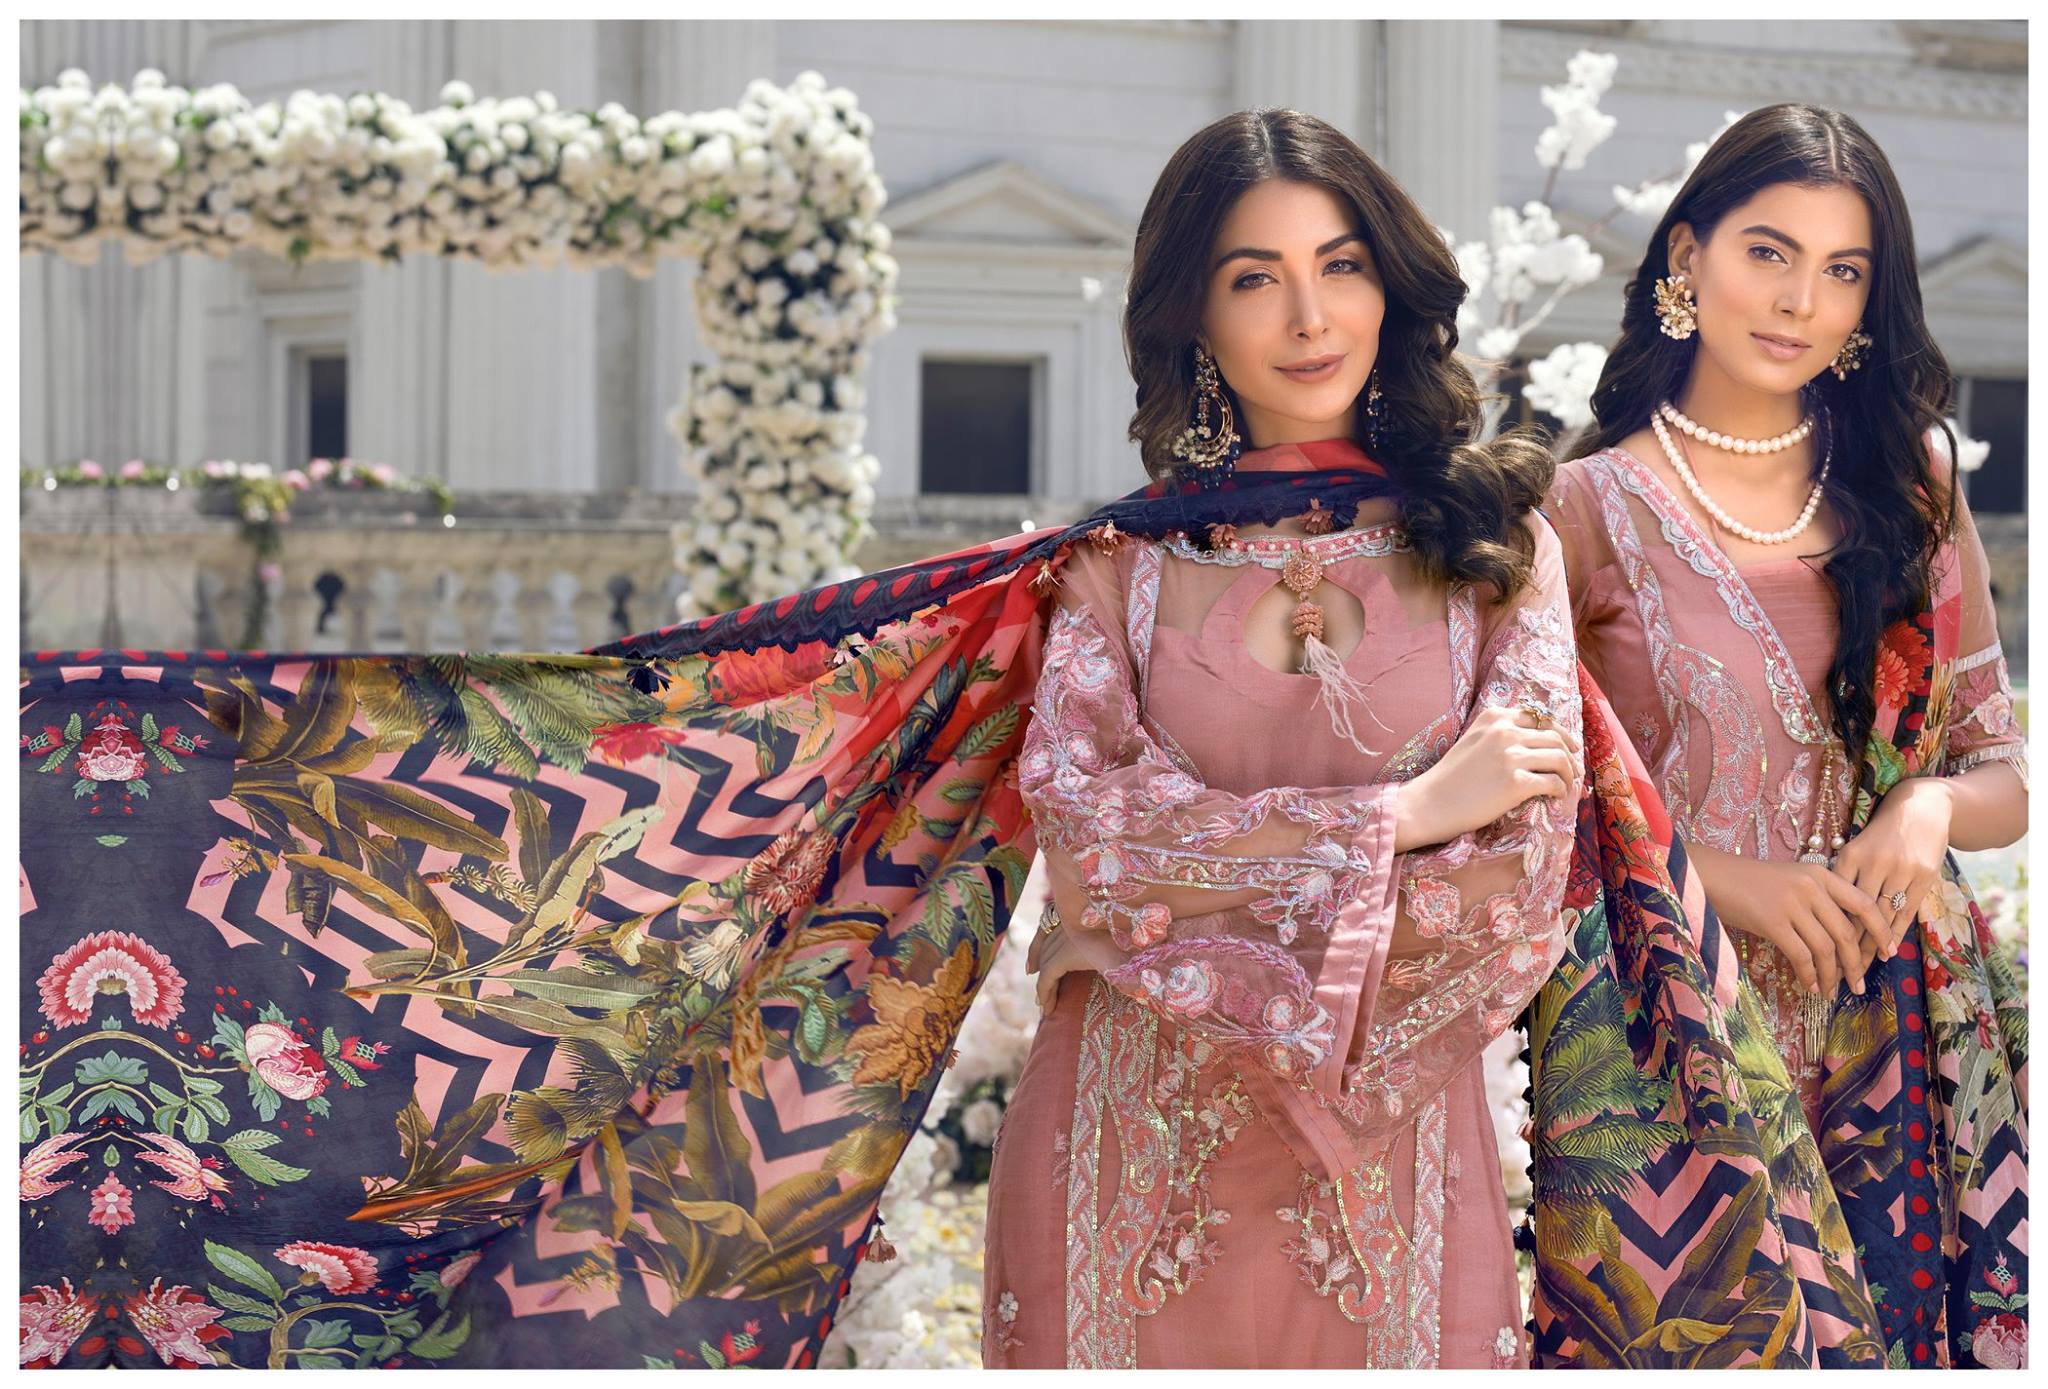 Gulaal Luxury Eid Collection 2019